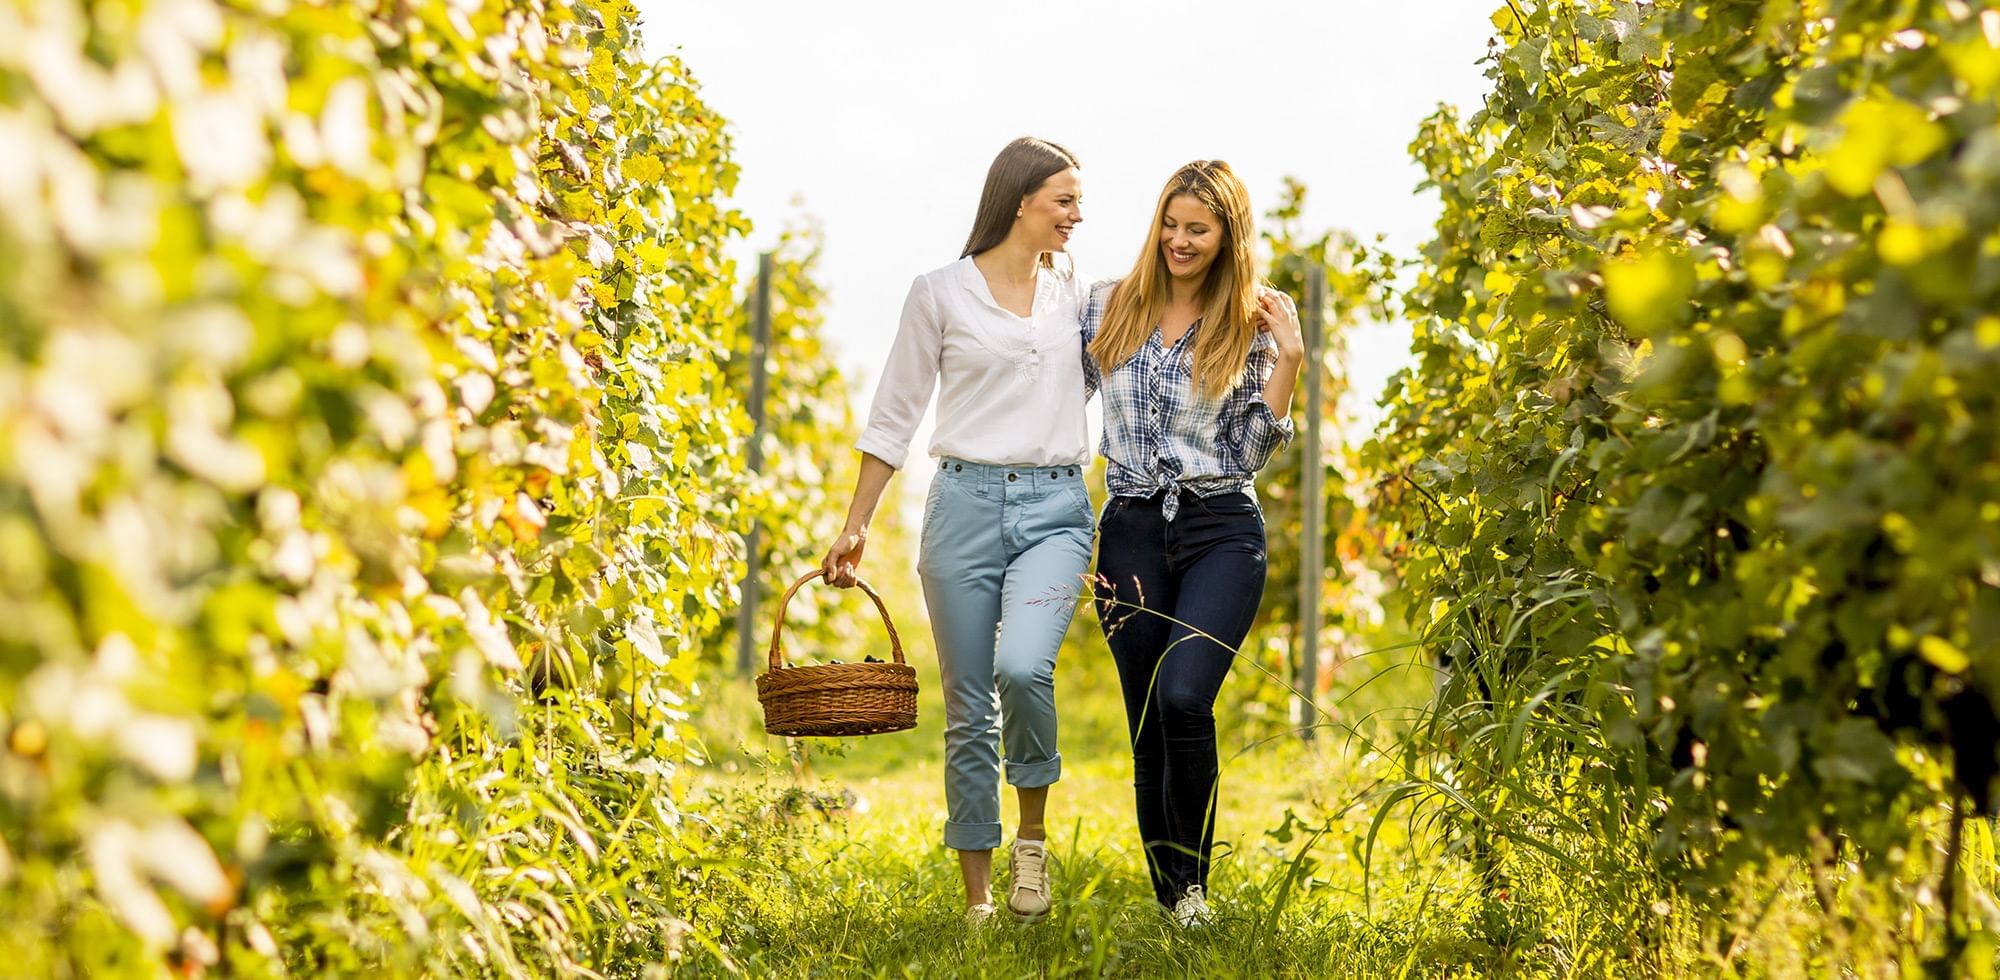 Girls walking in a vineyard